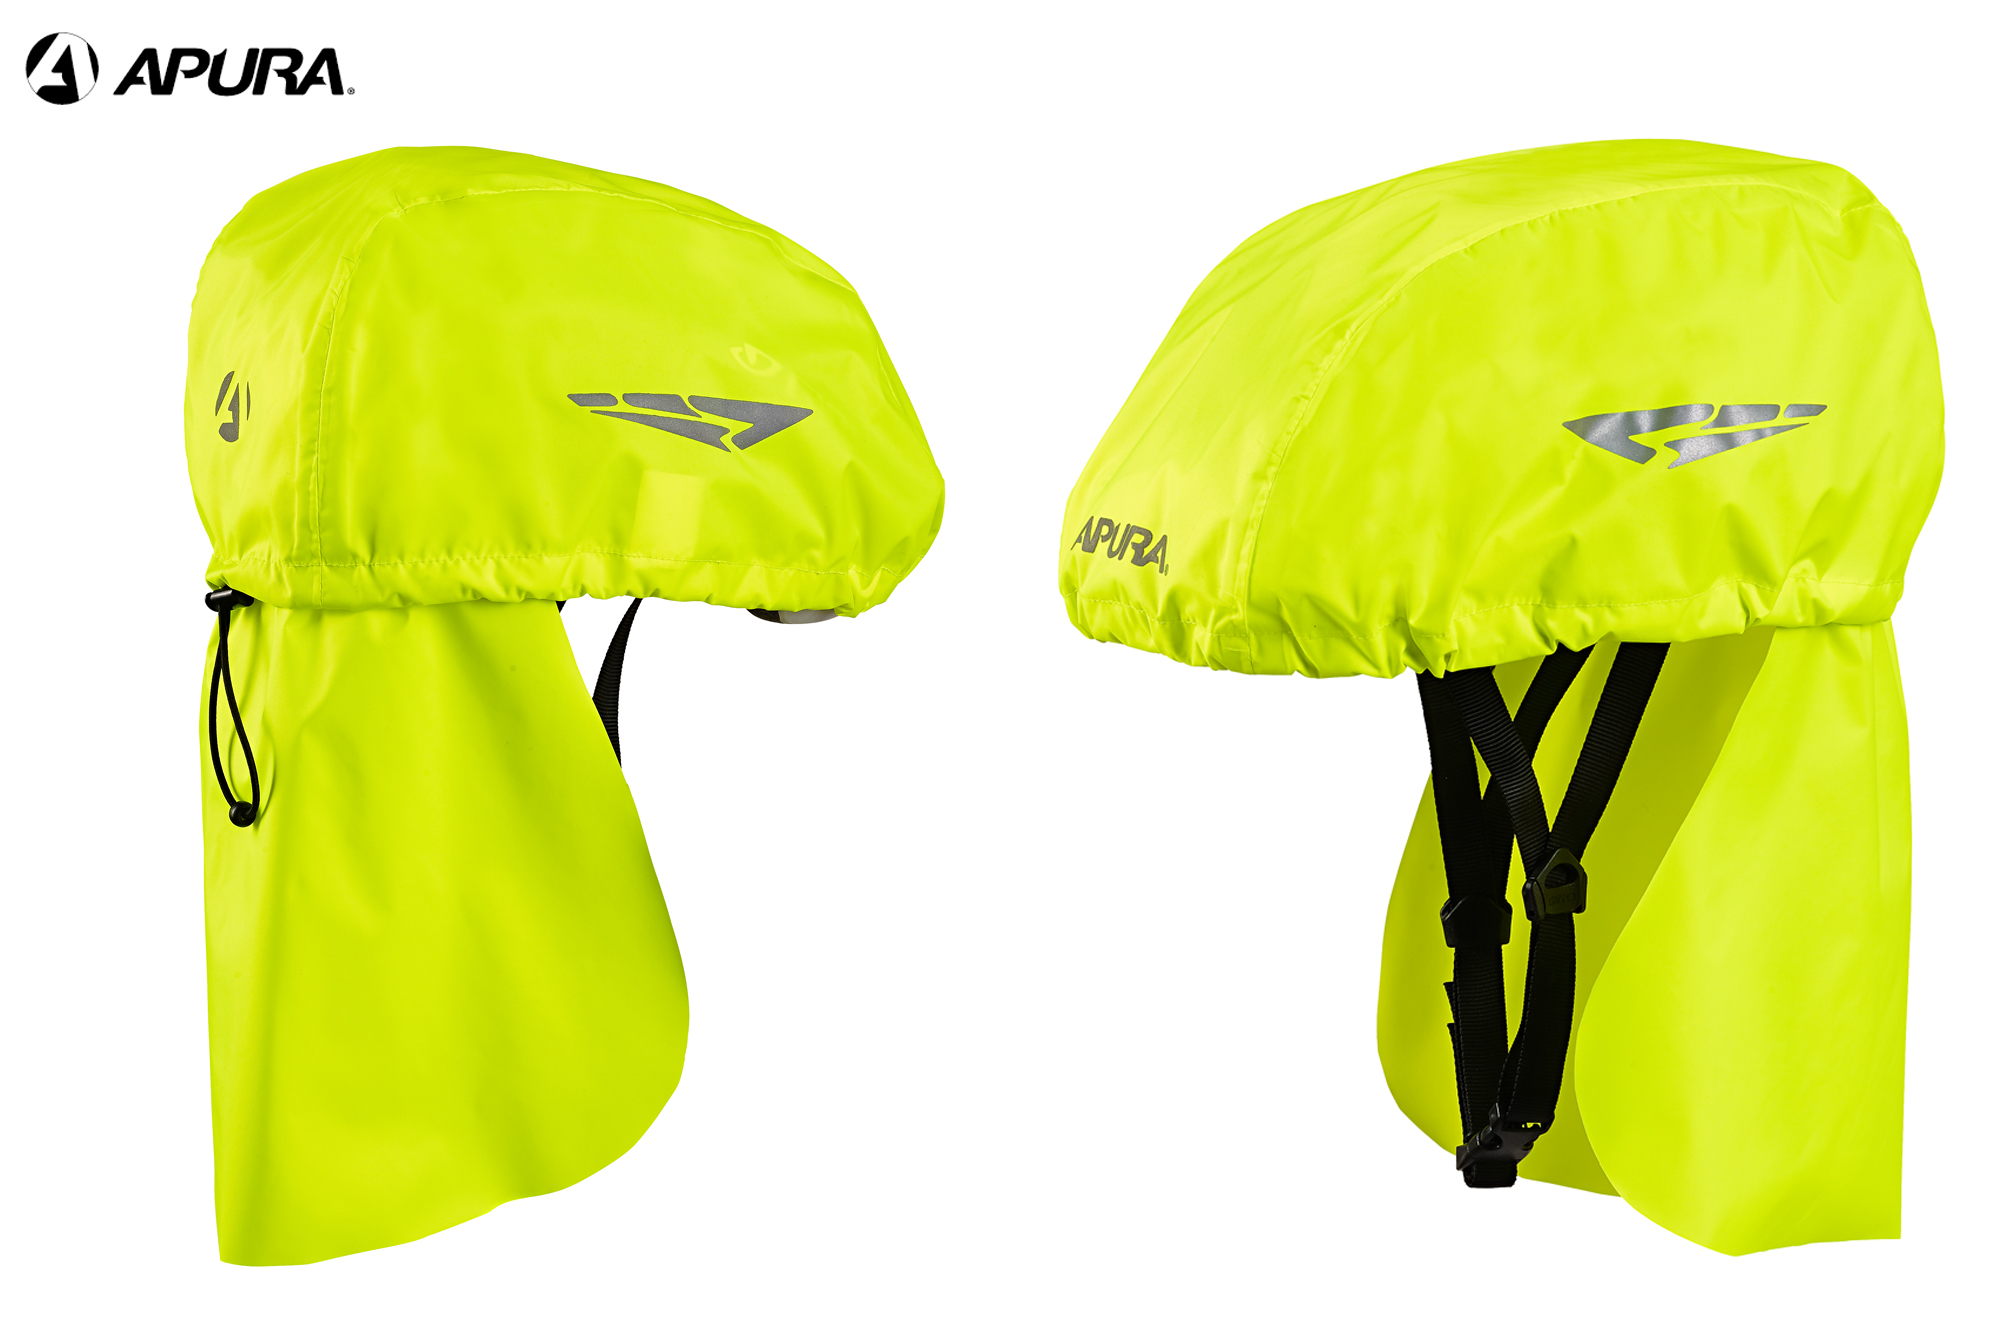 APURA Helm Regenüberzug Barrier Shield - gelb